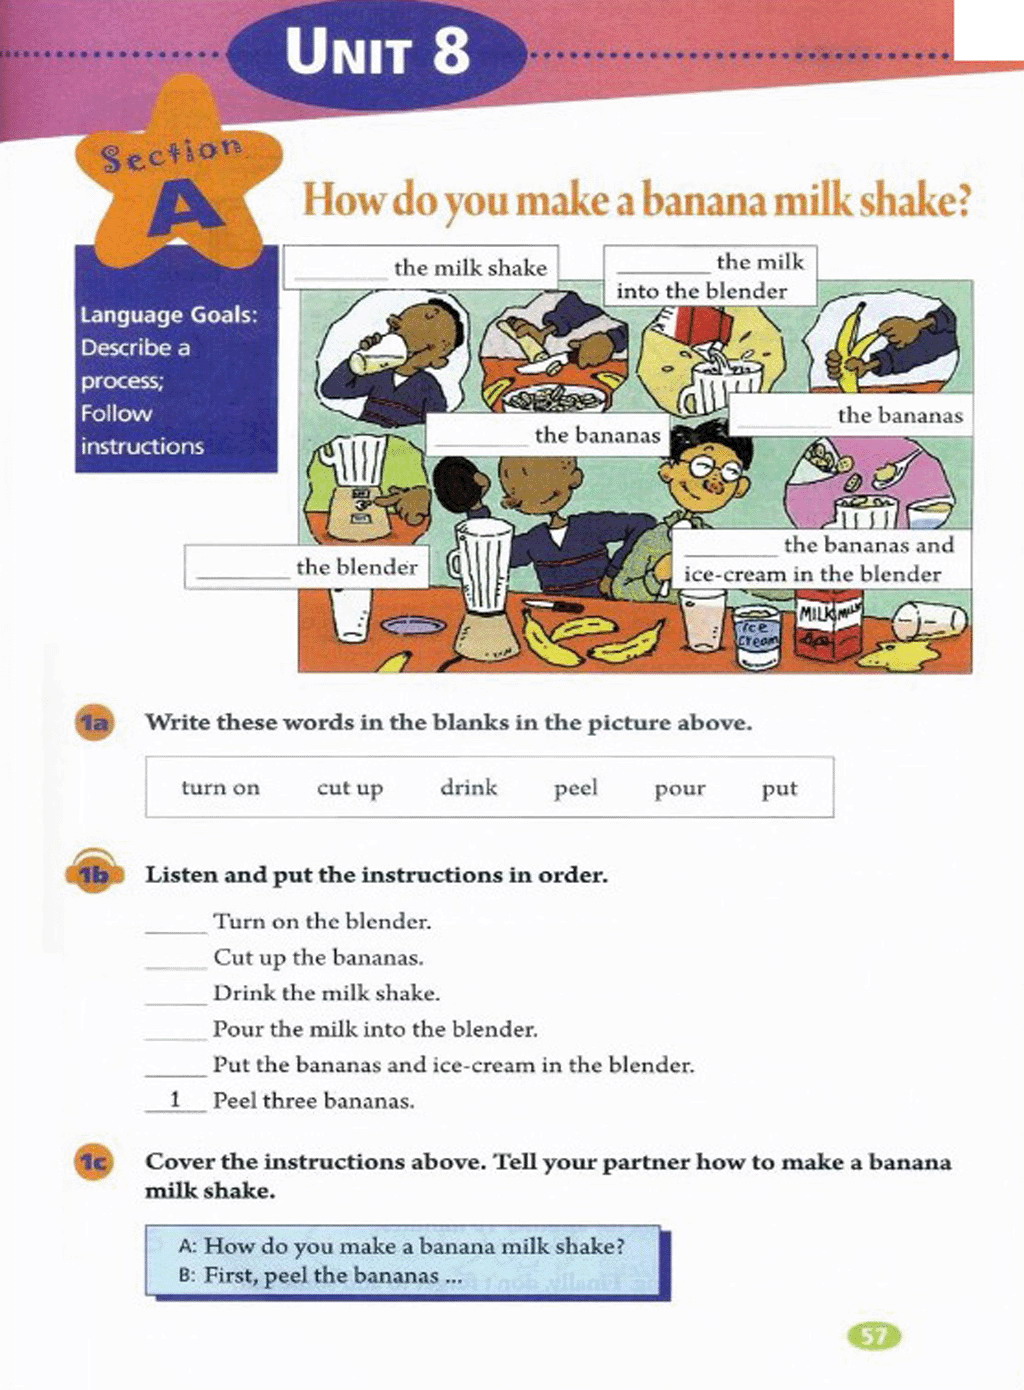 部编版八年级英语上册Unit 8 How do you make a banana milk shake?第0页